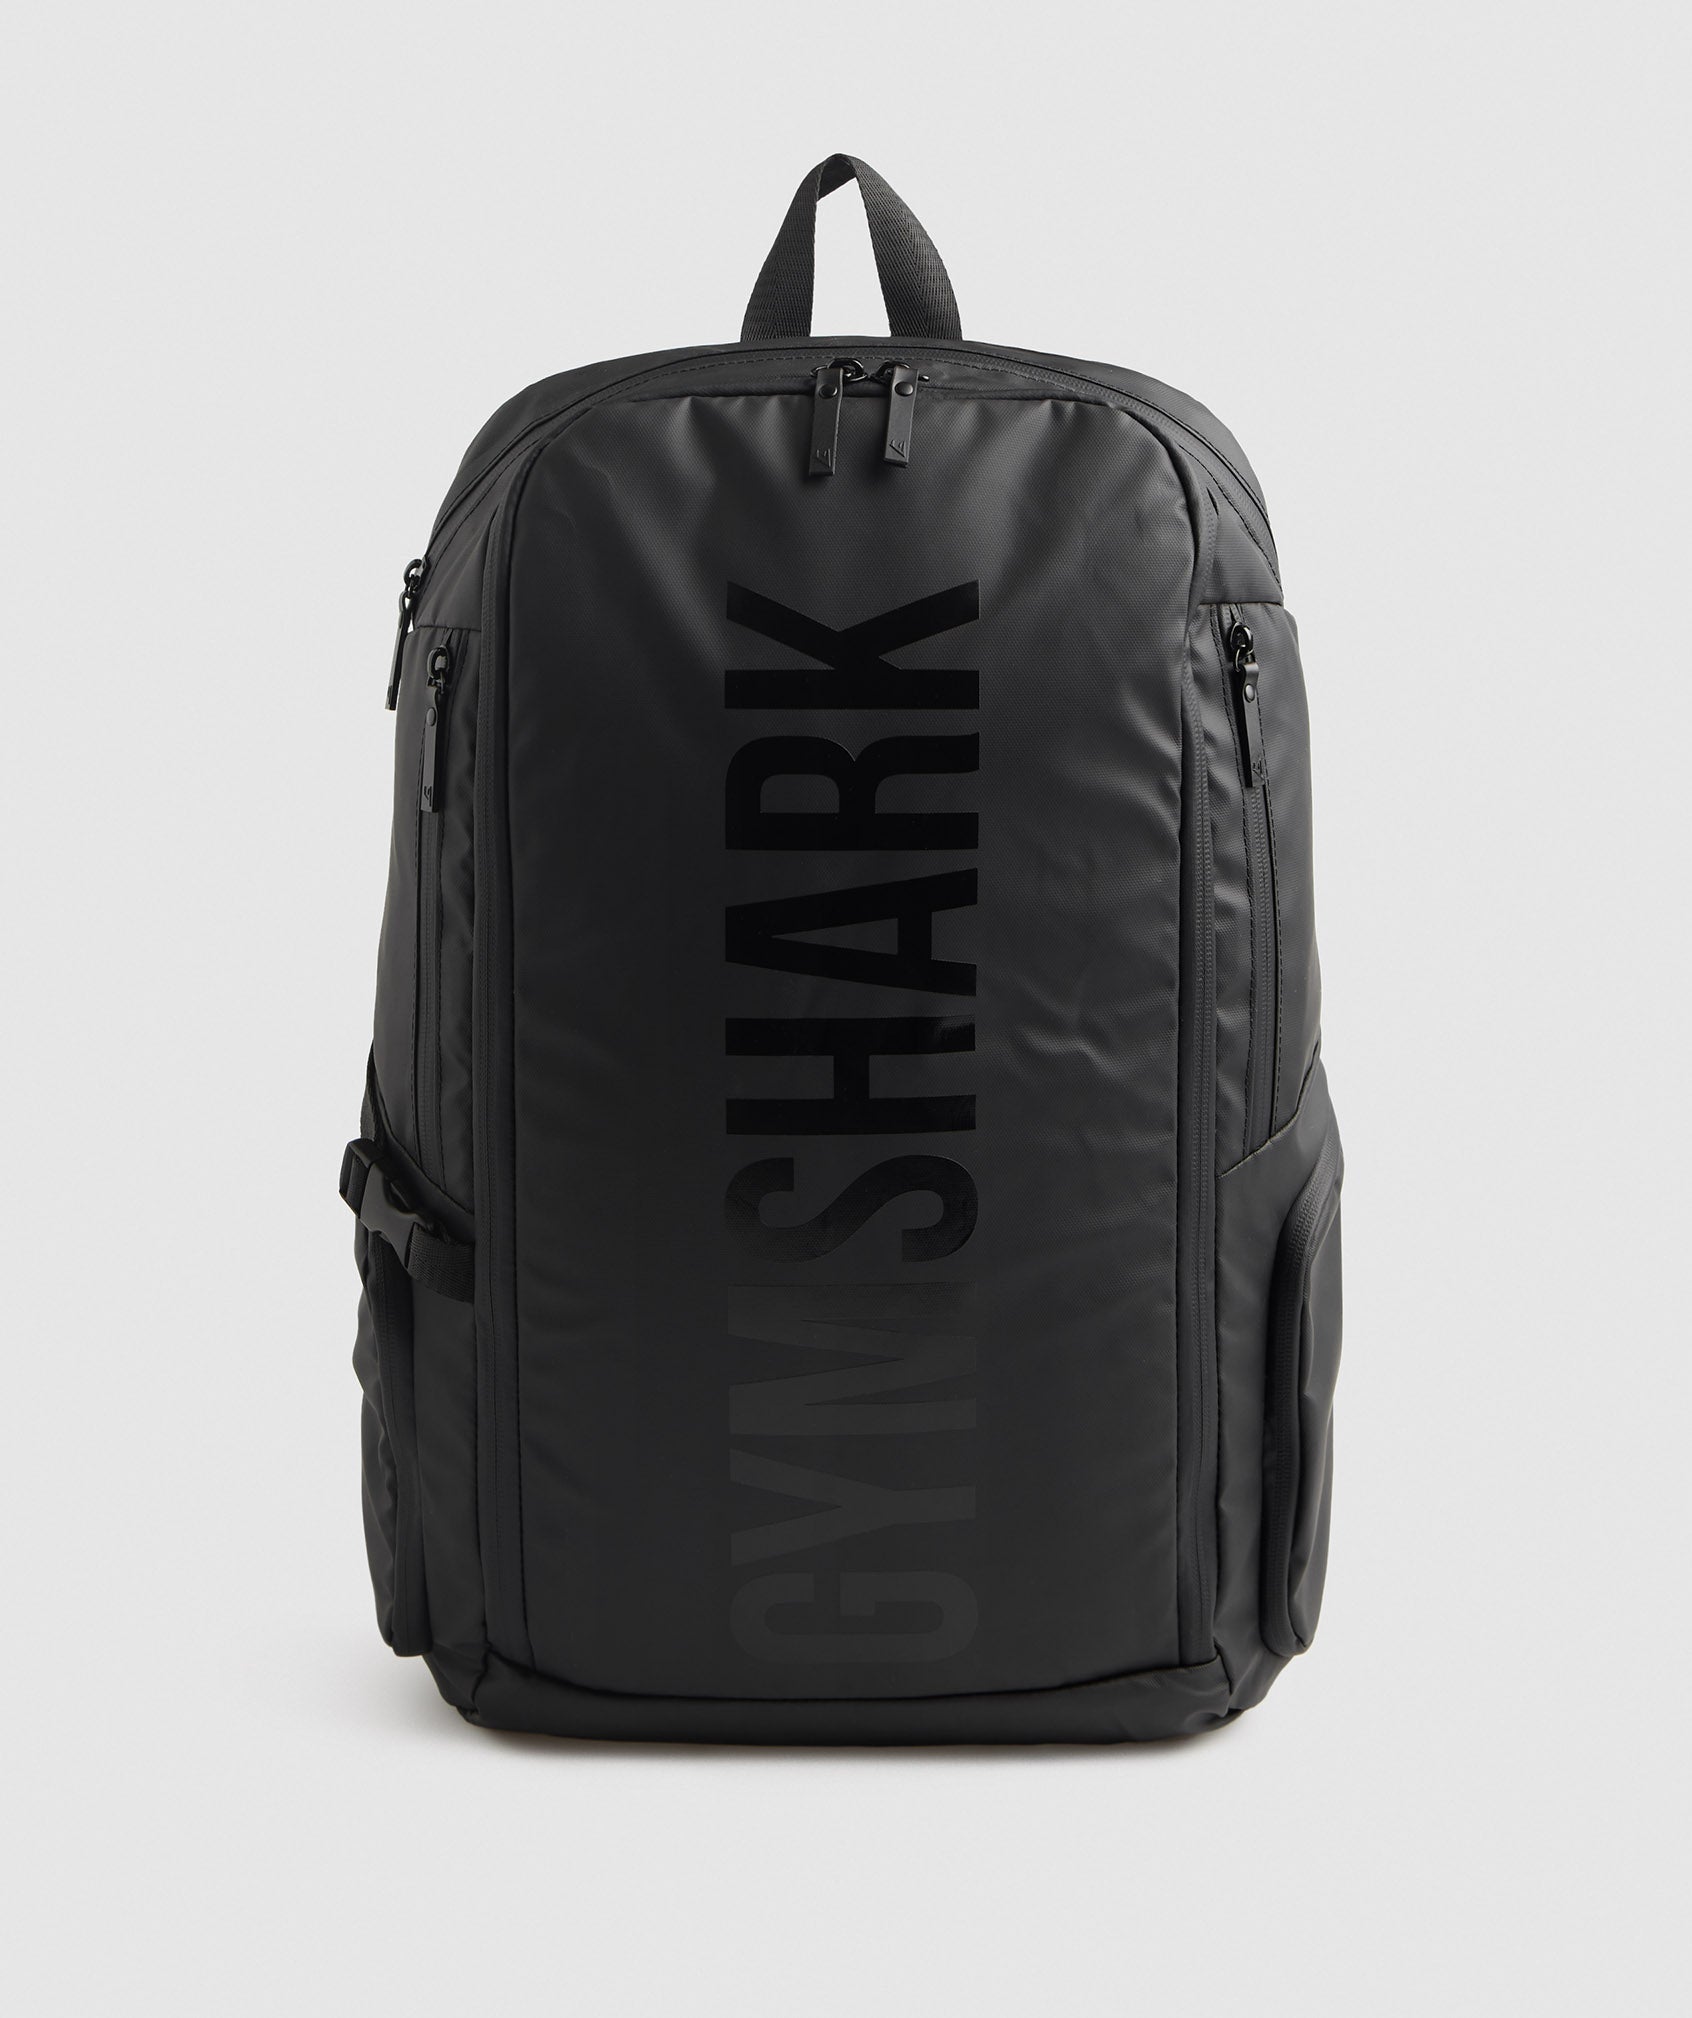 X-Series 0.3 Backpack in Black - view 1